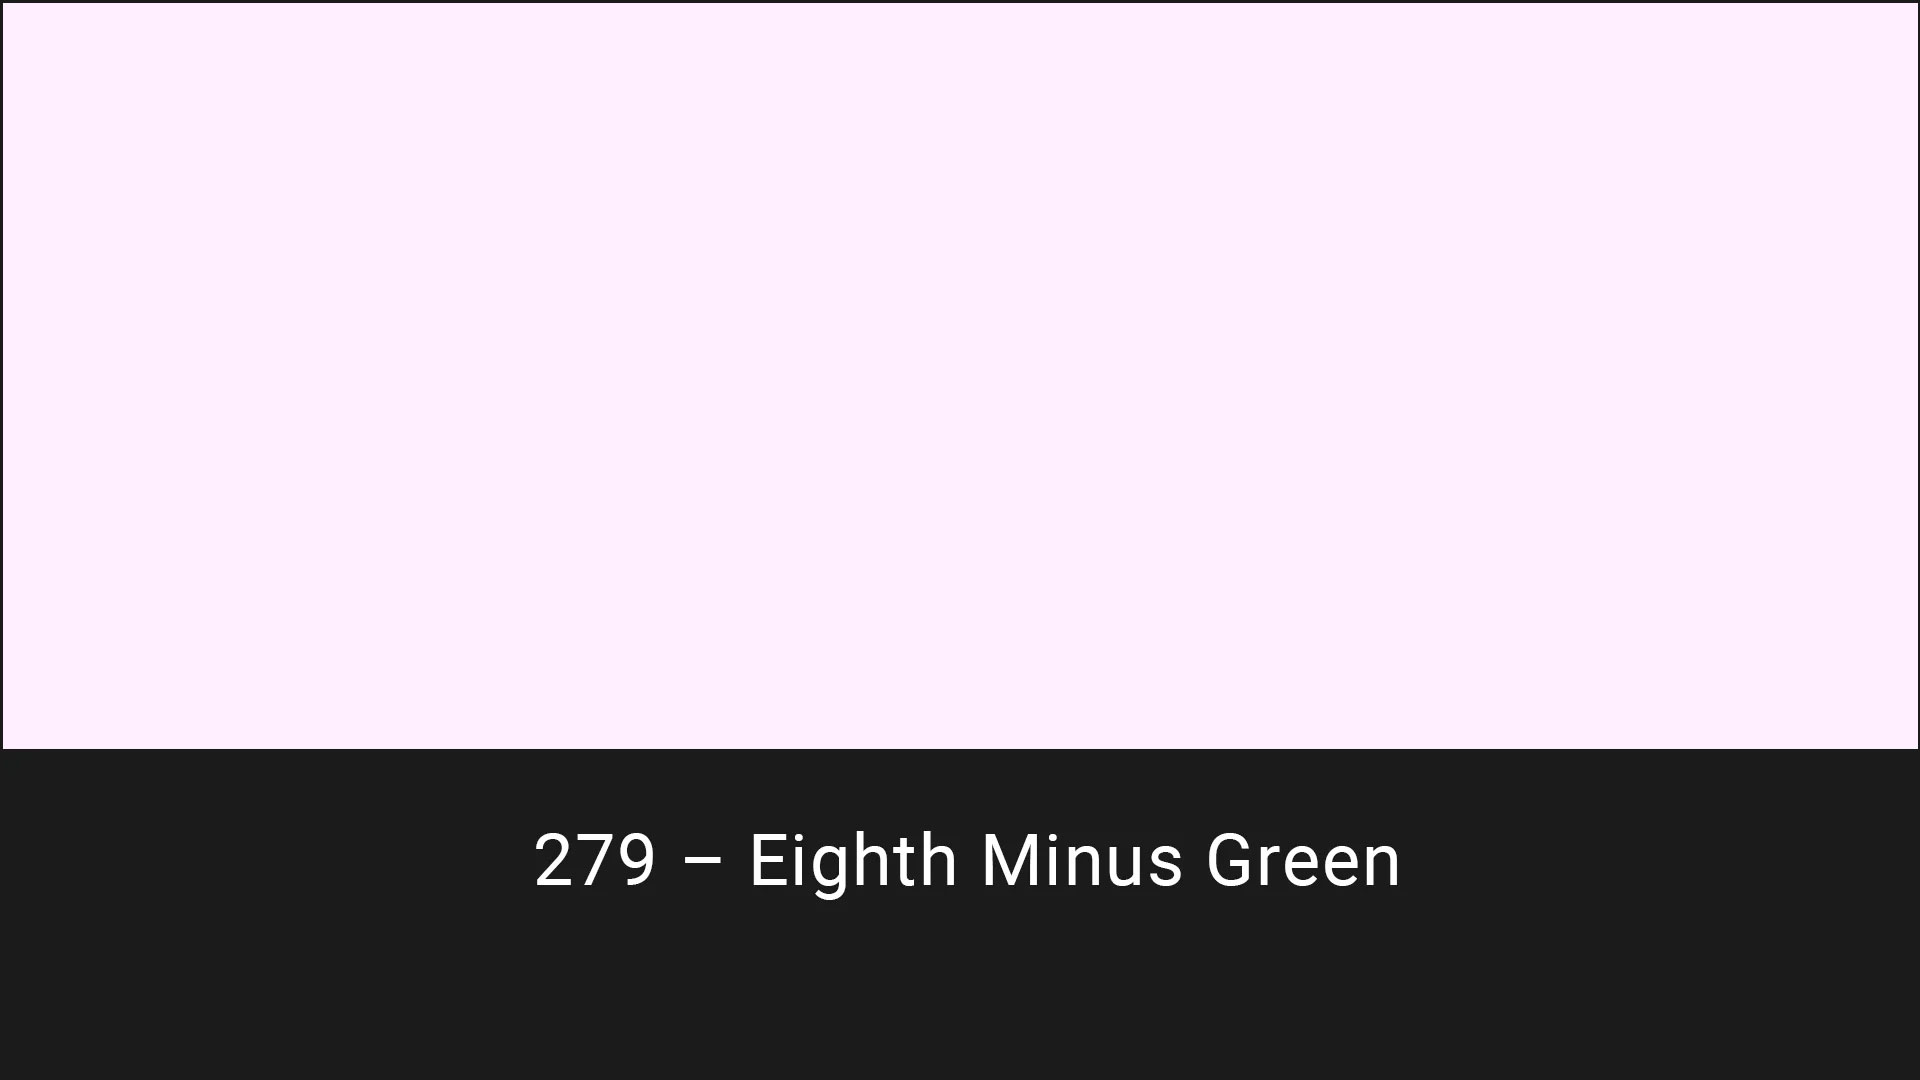 Cotech filters 279 Eighth Minus Green